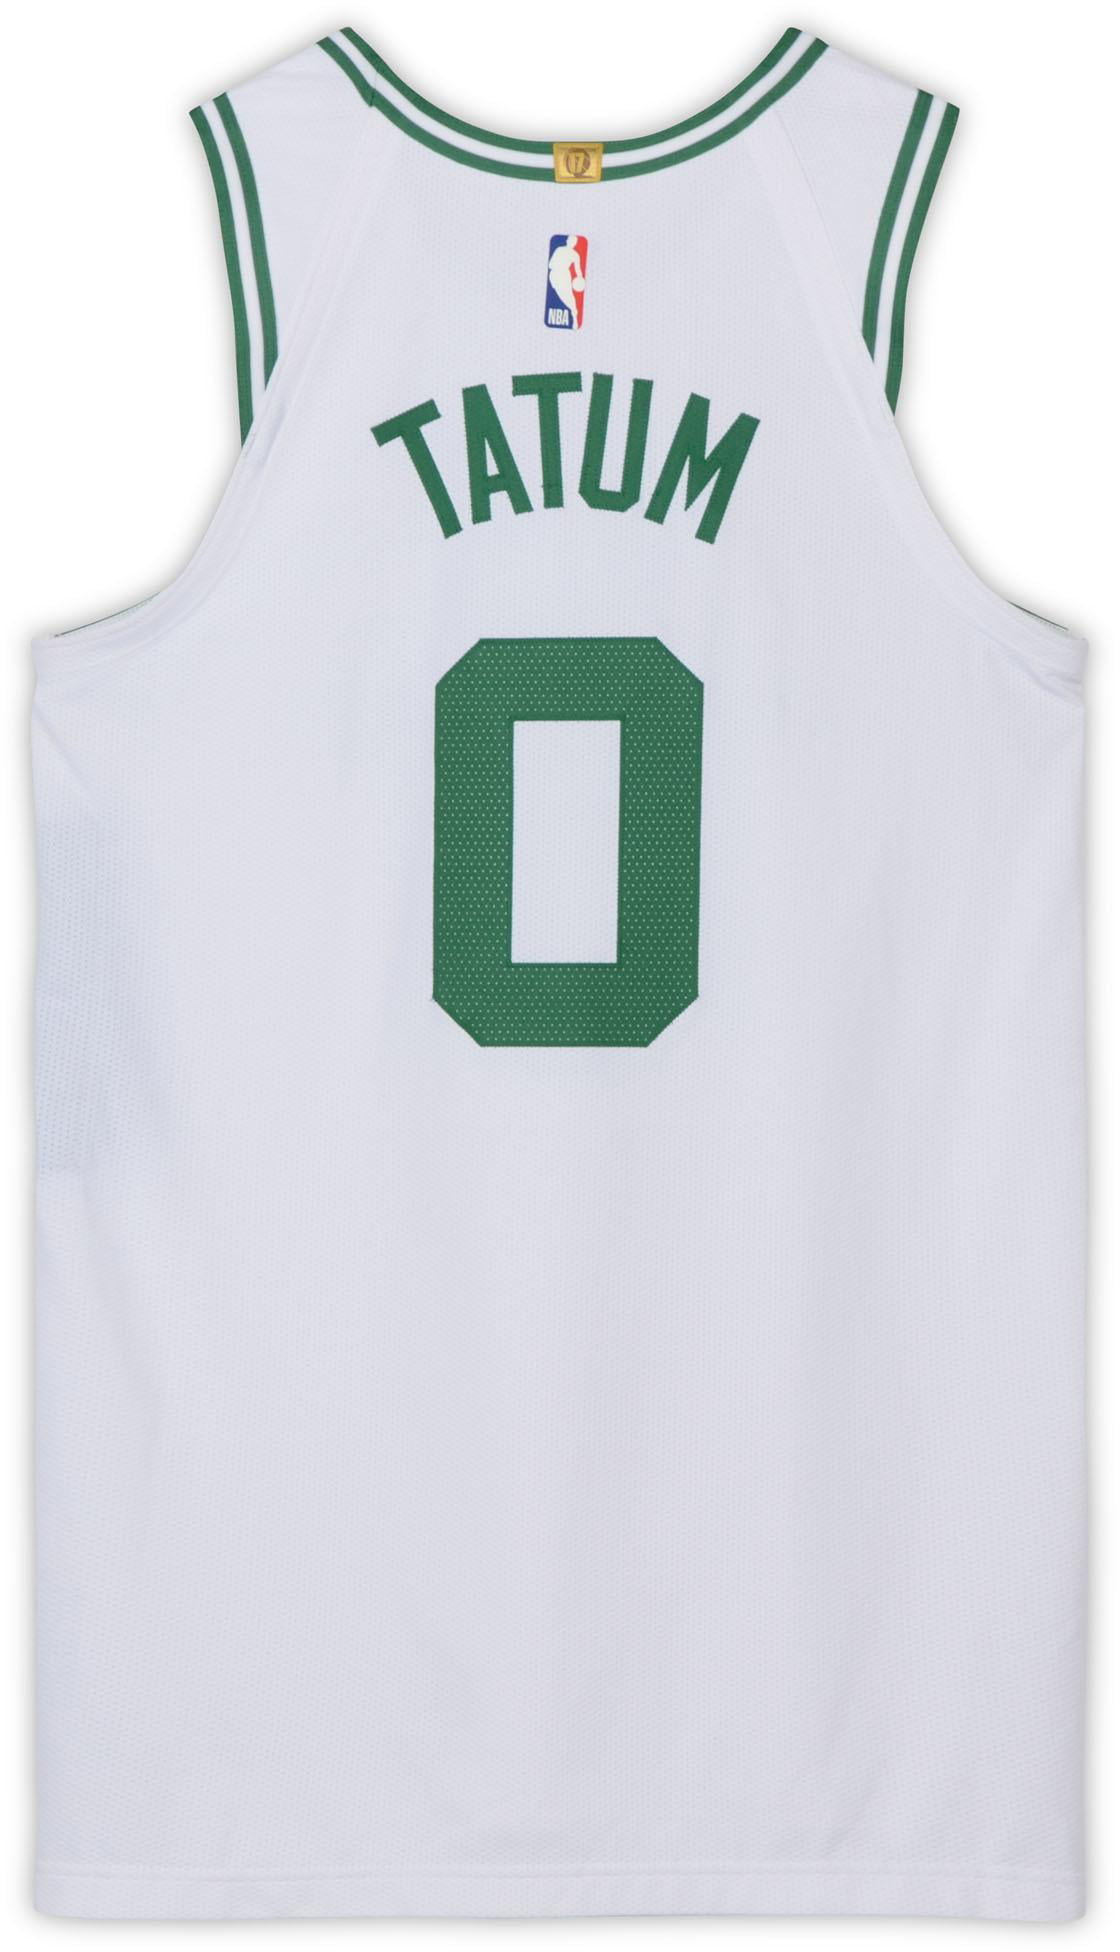 jayson tatum white jersey